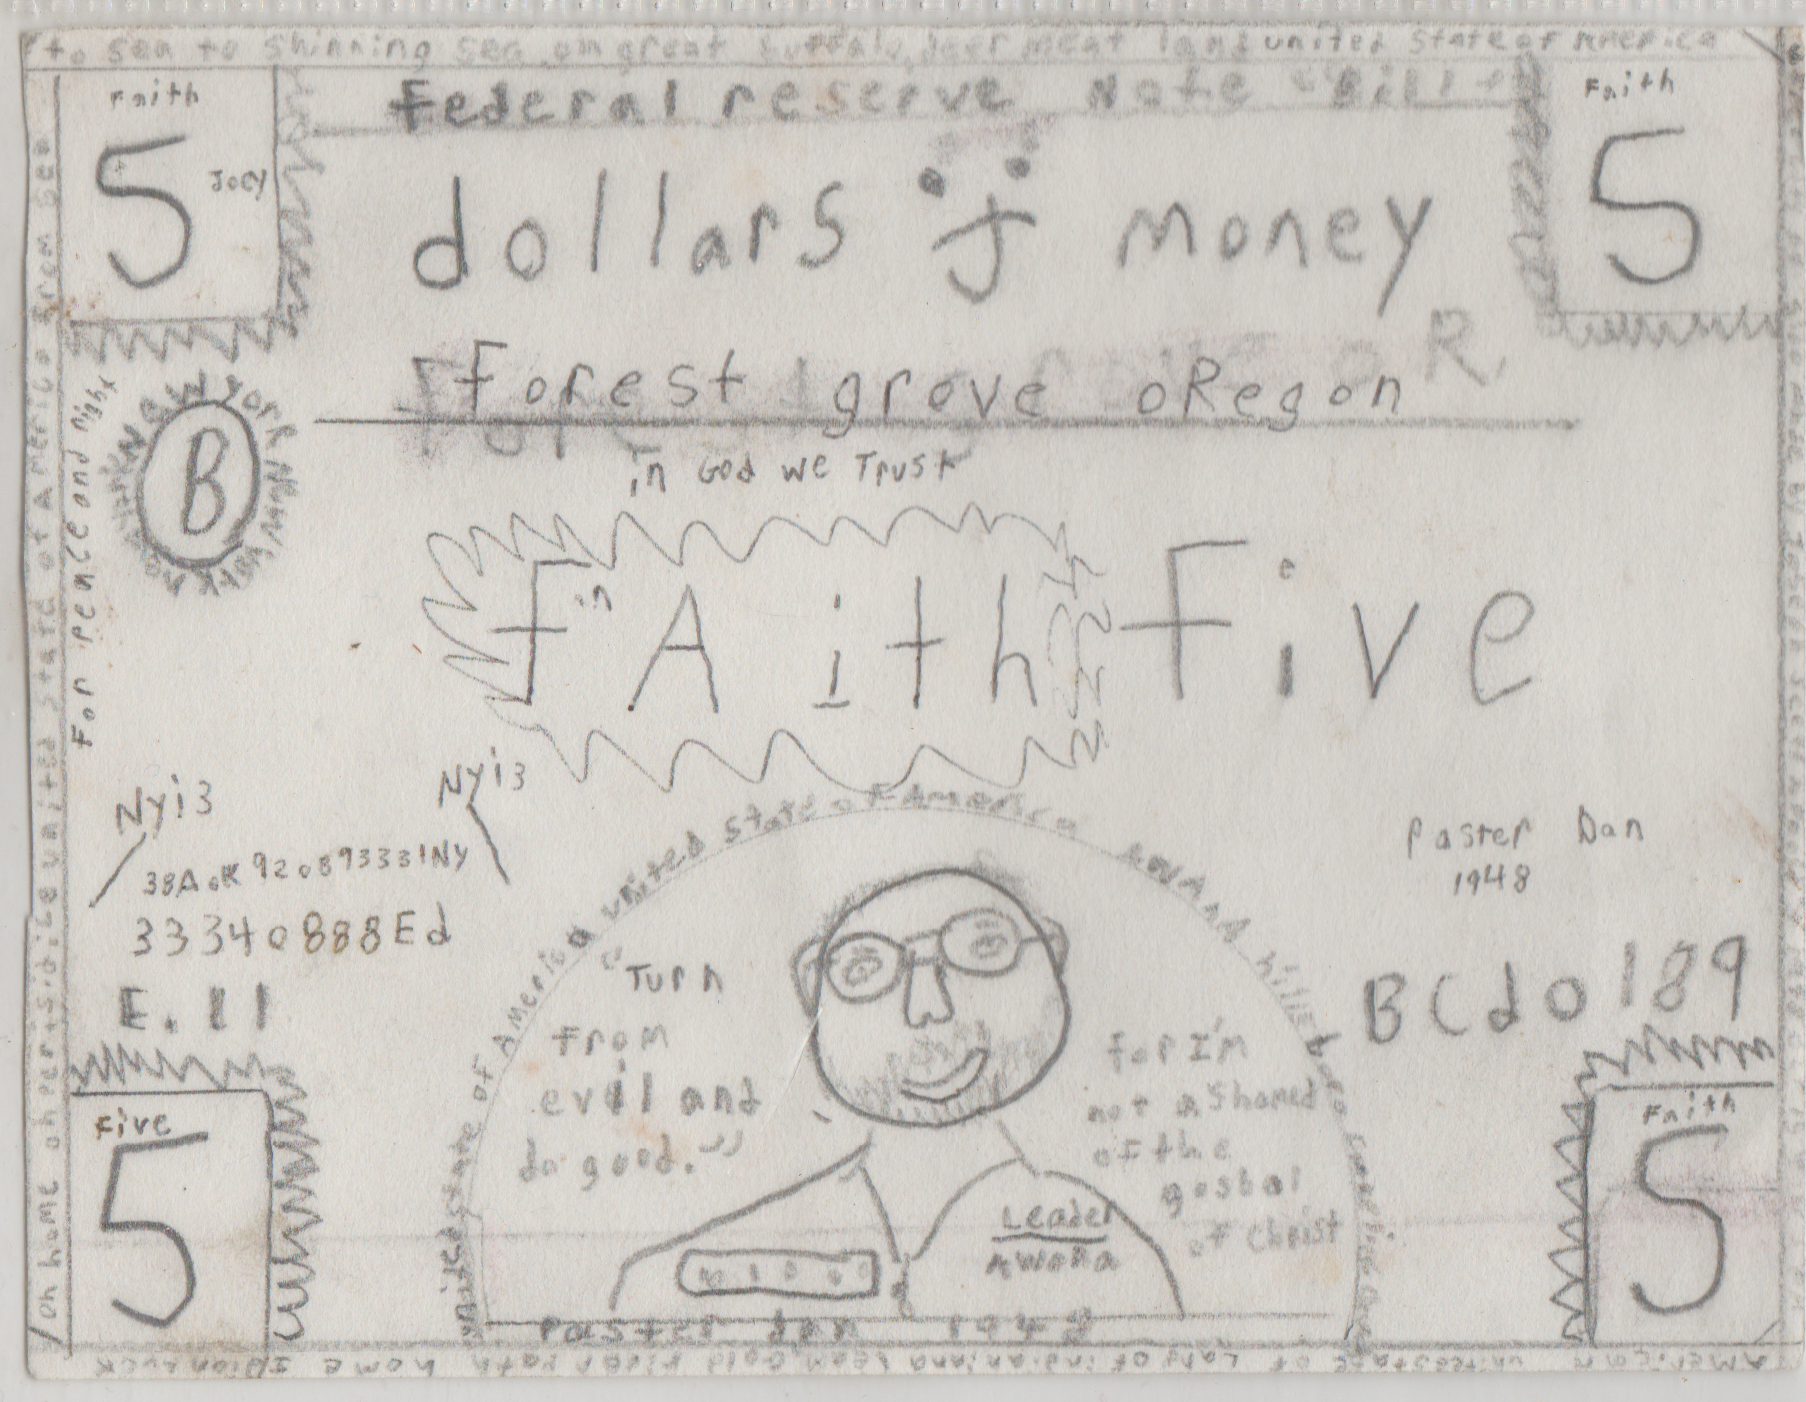 1998-10-15 - Thursday - Joey Money - 5-dollar bill, Faith, Pastor Dan Kennedy, 1pic.png